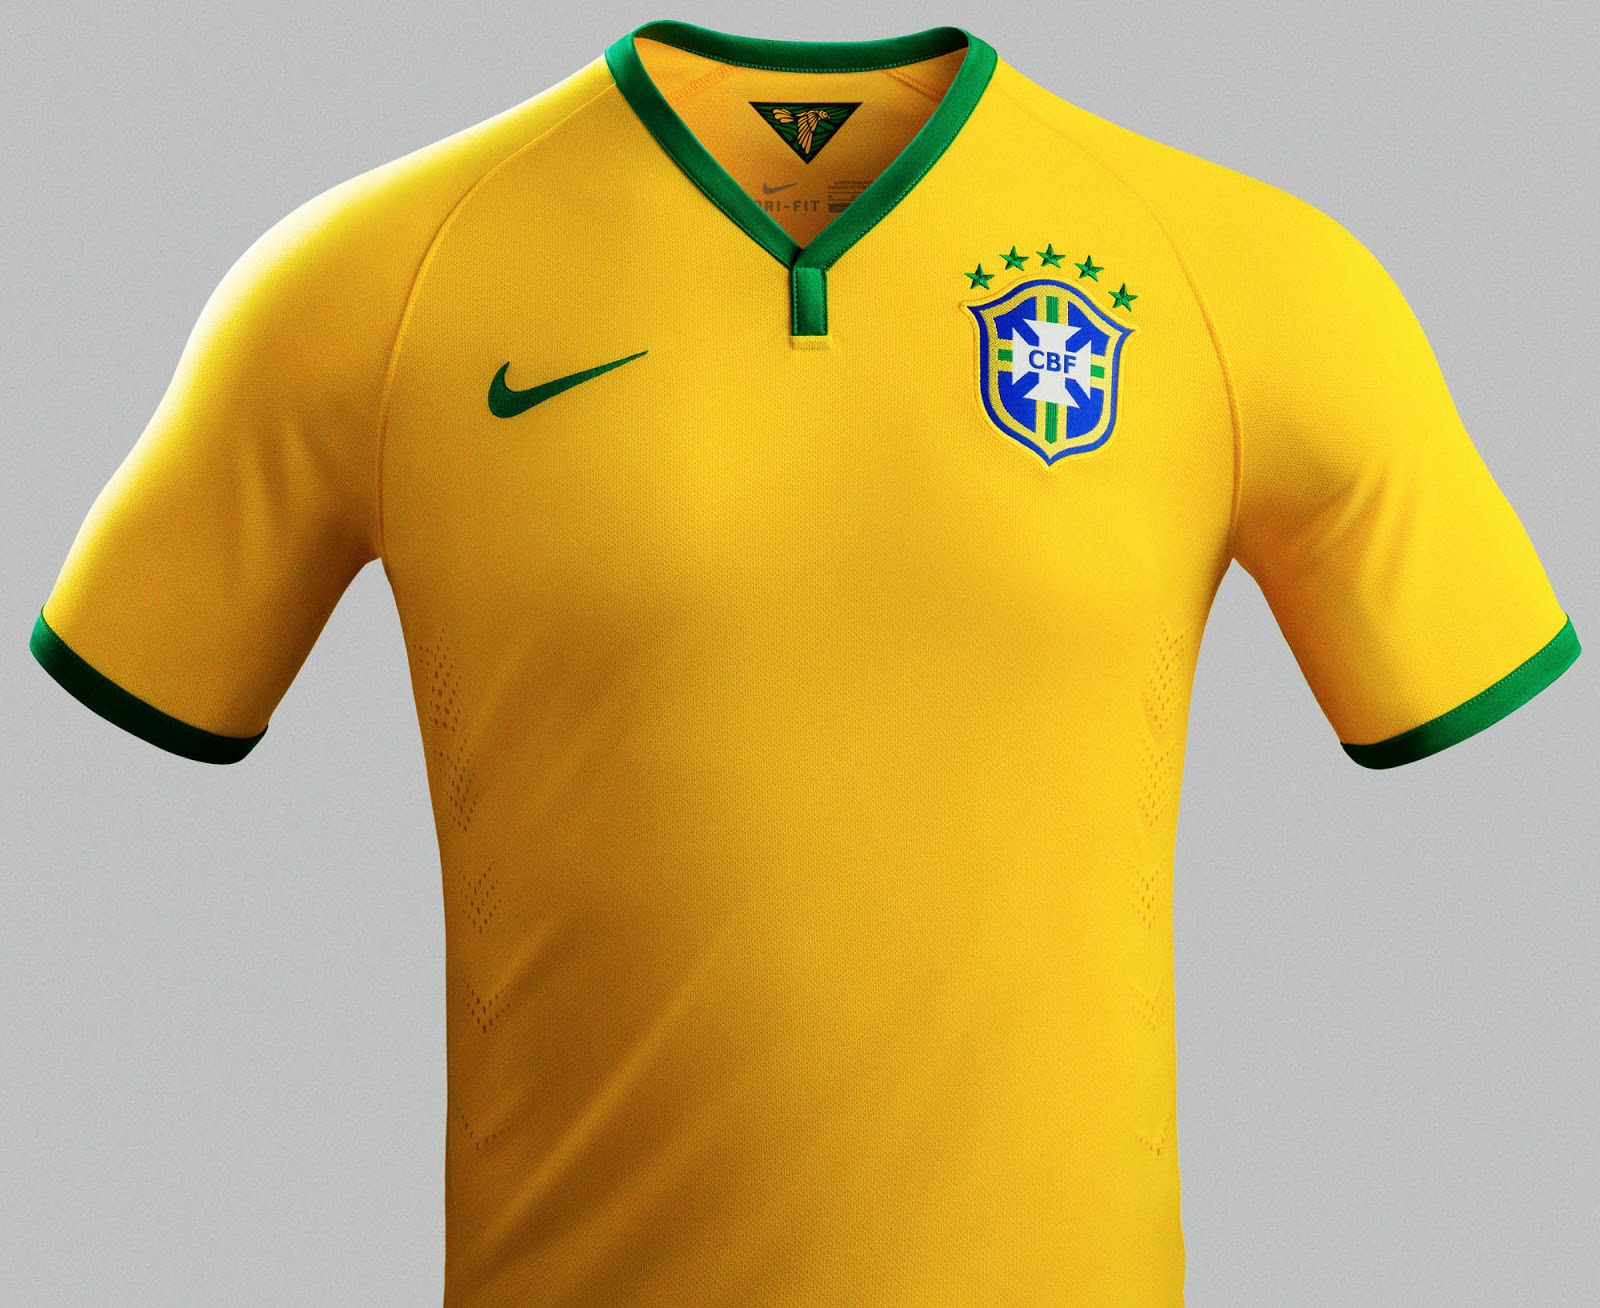 2014 World Cup Brazil Jersey